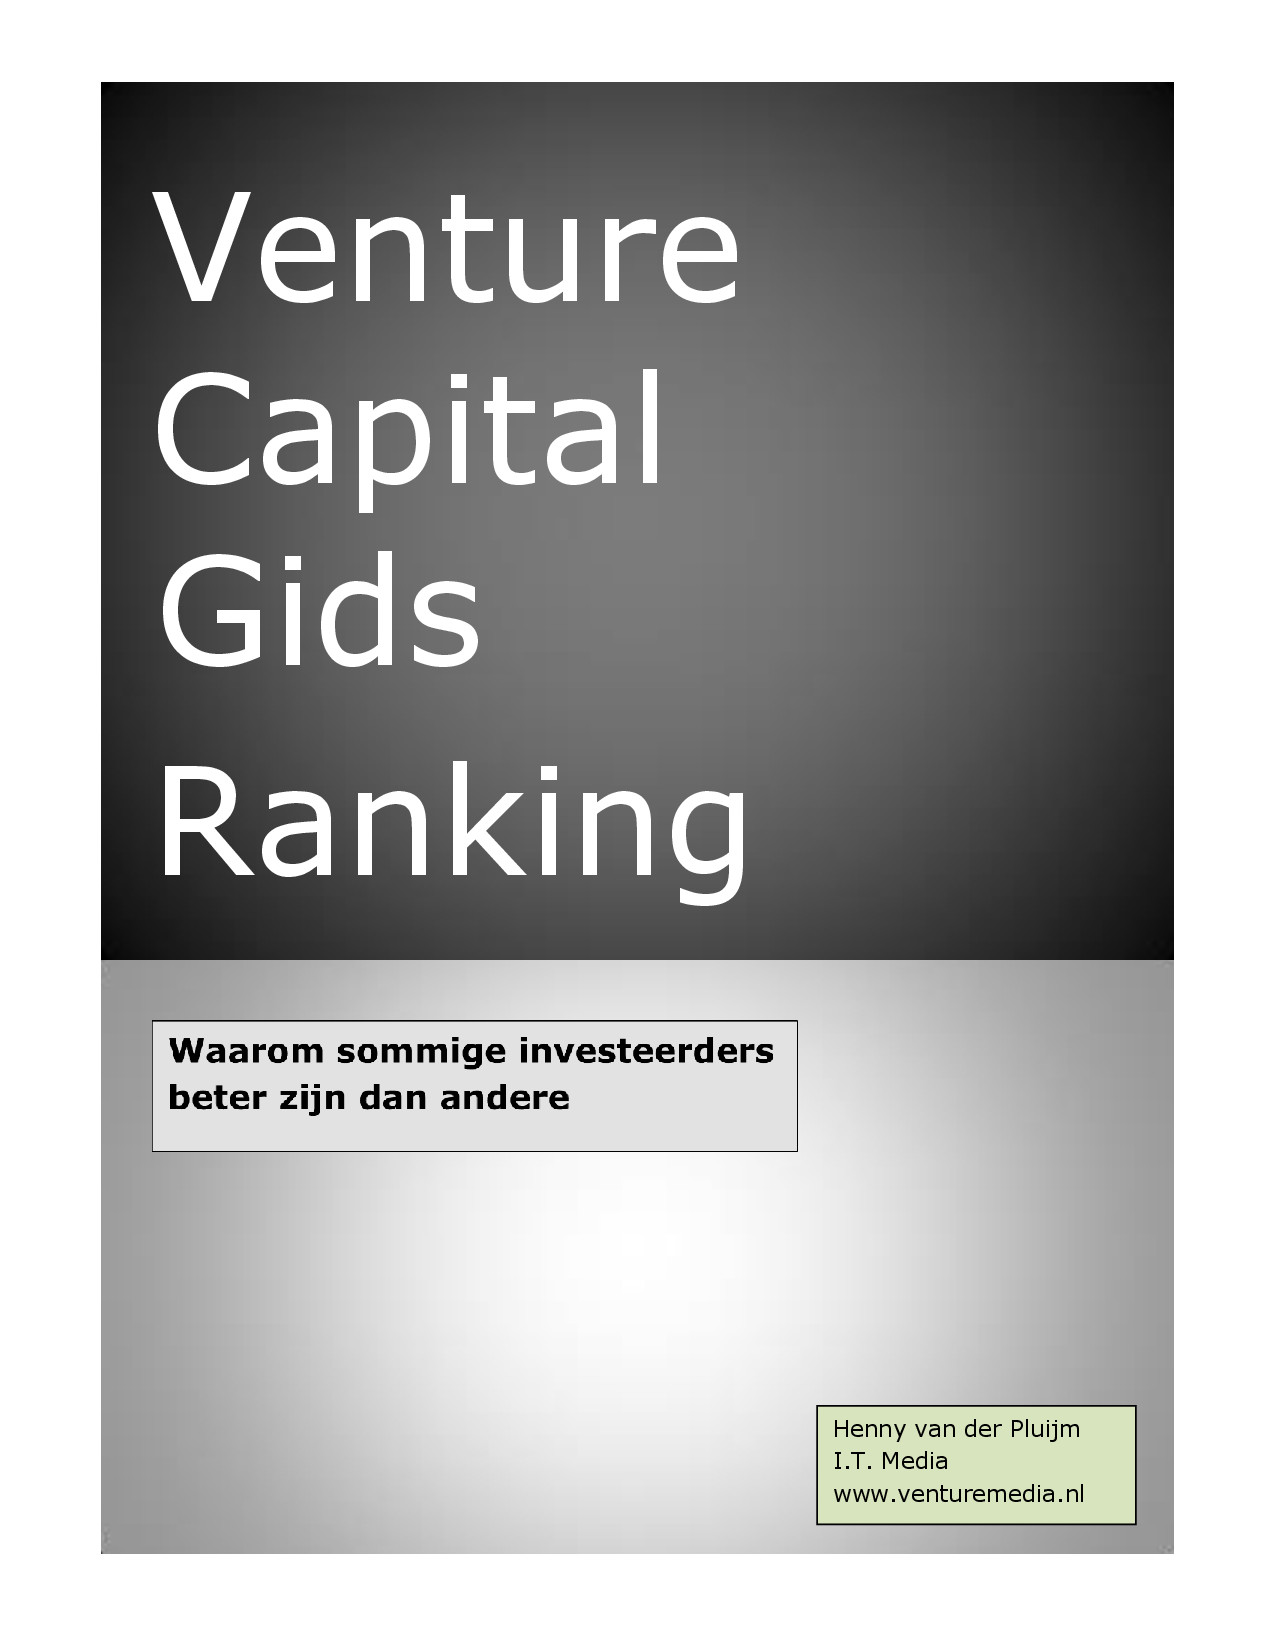 Venture Capital Ranking